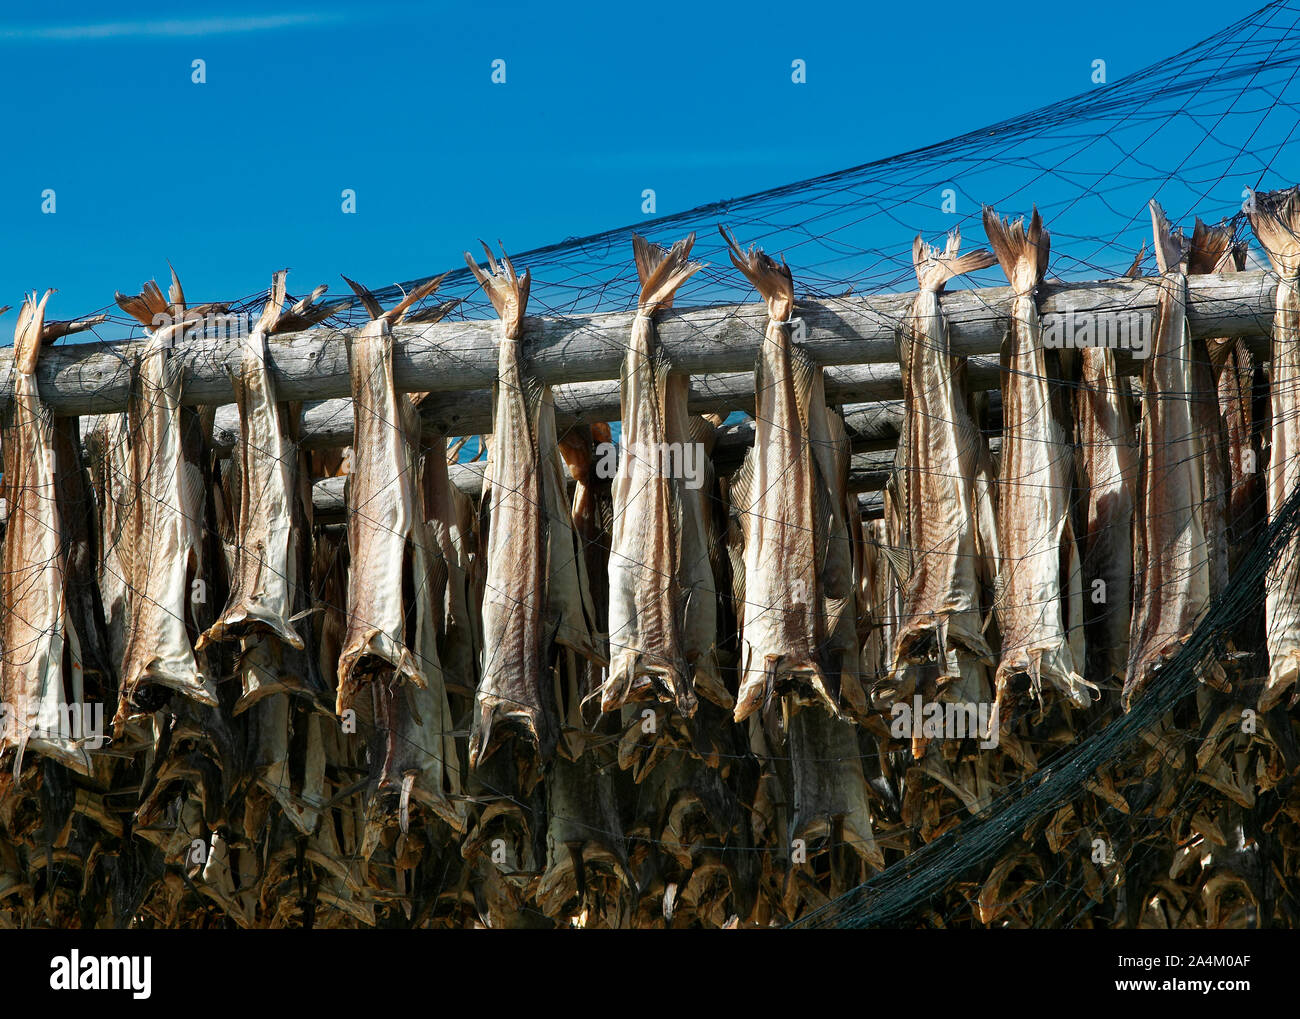 Drying cod outdoors at Varangerfjorden, Finnmark, Norway Stock Photo